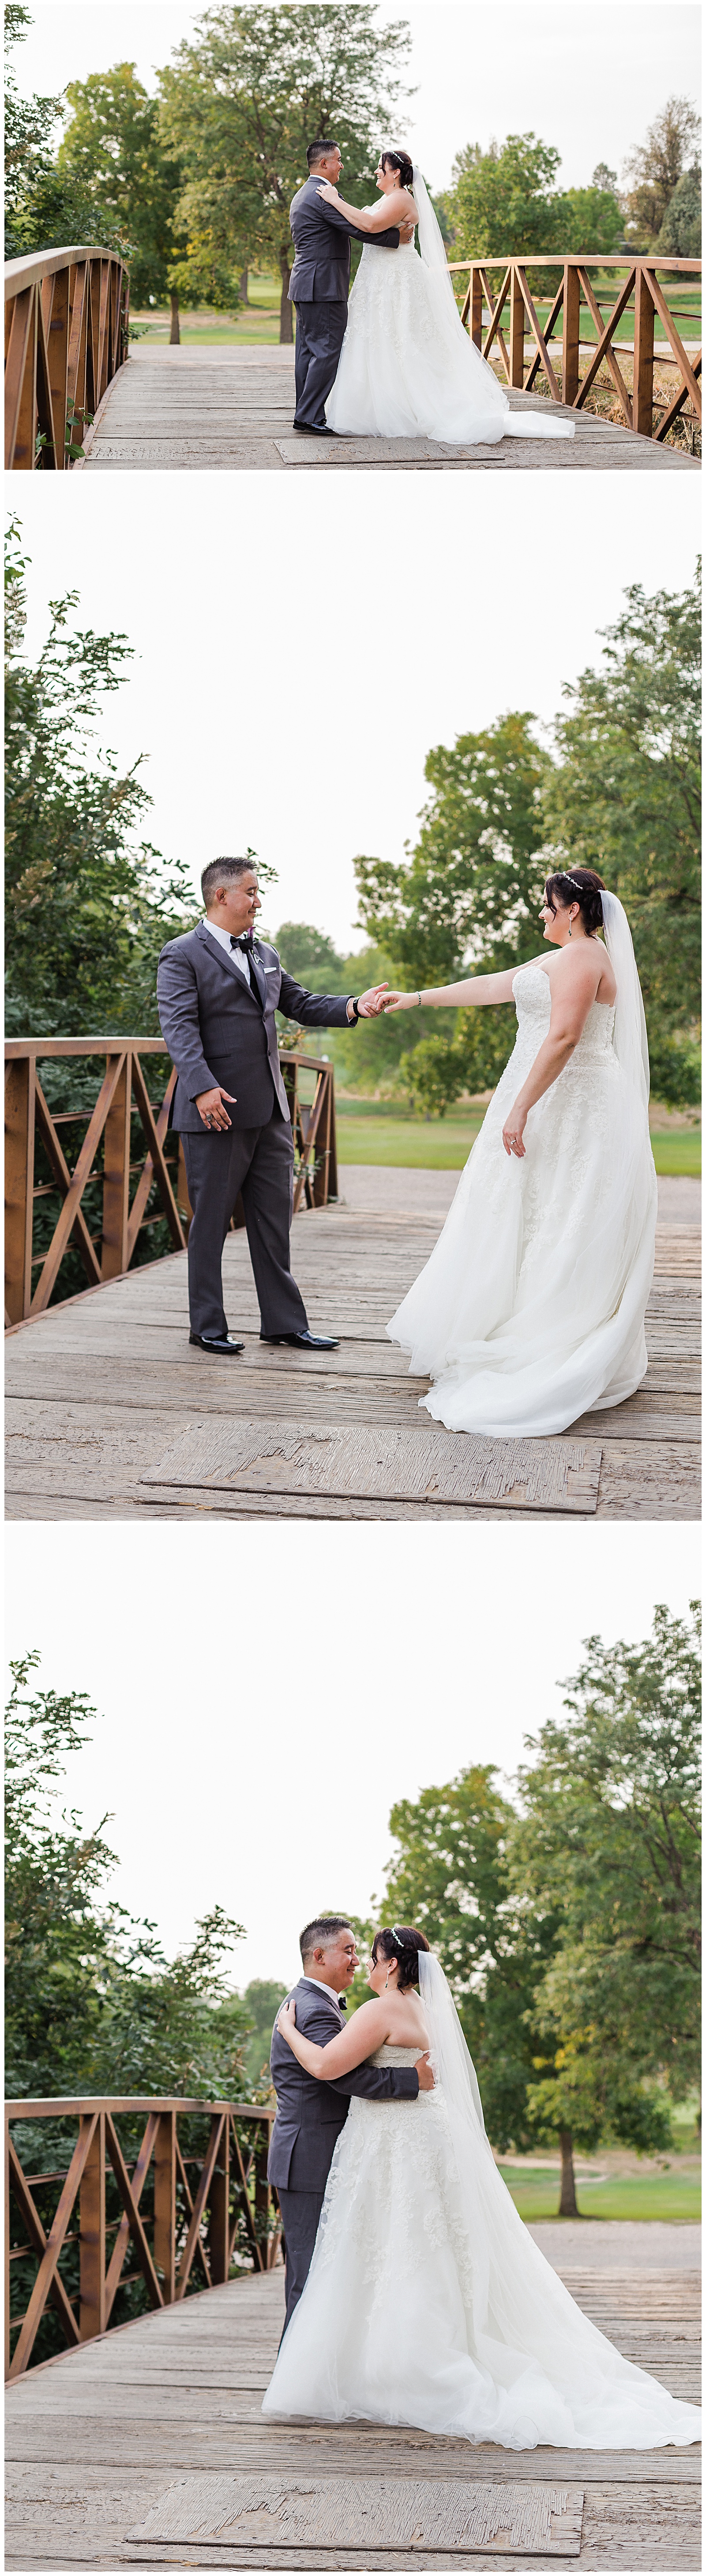 Wellshire Event Center Wedding bridge photo